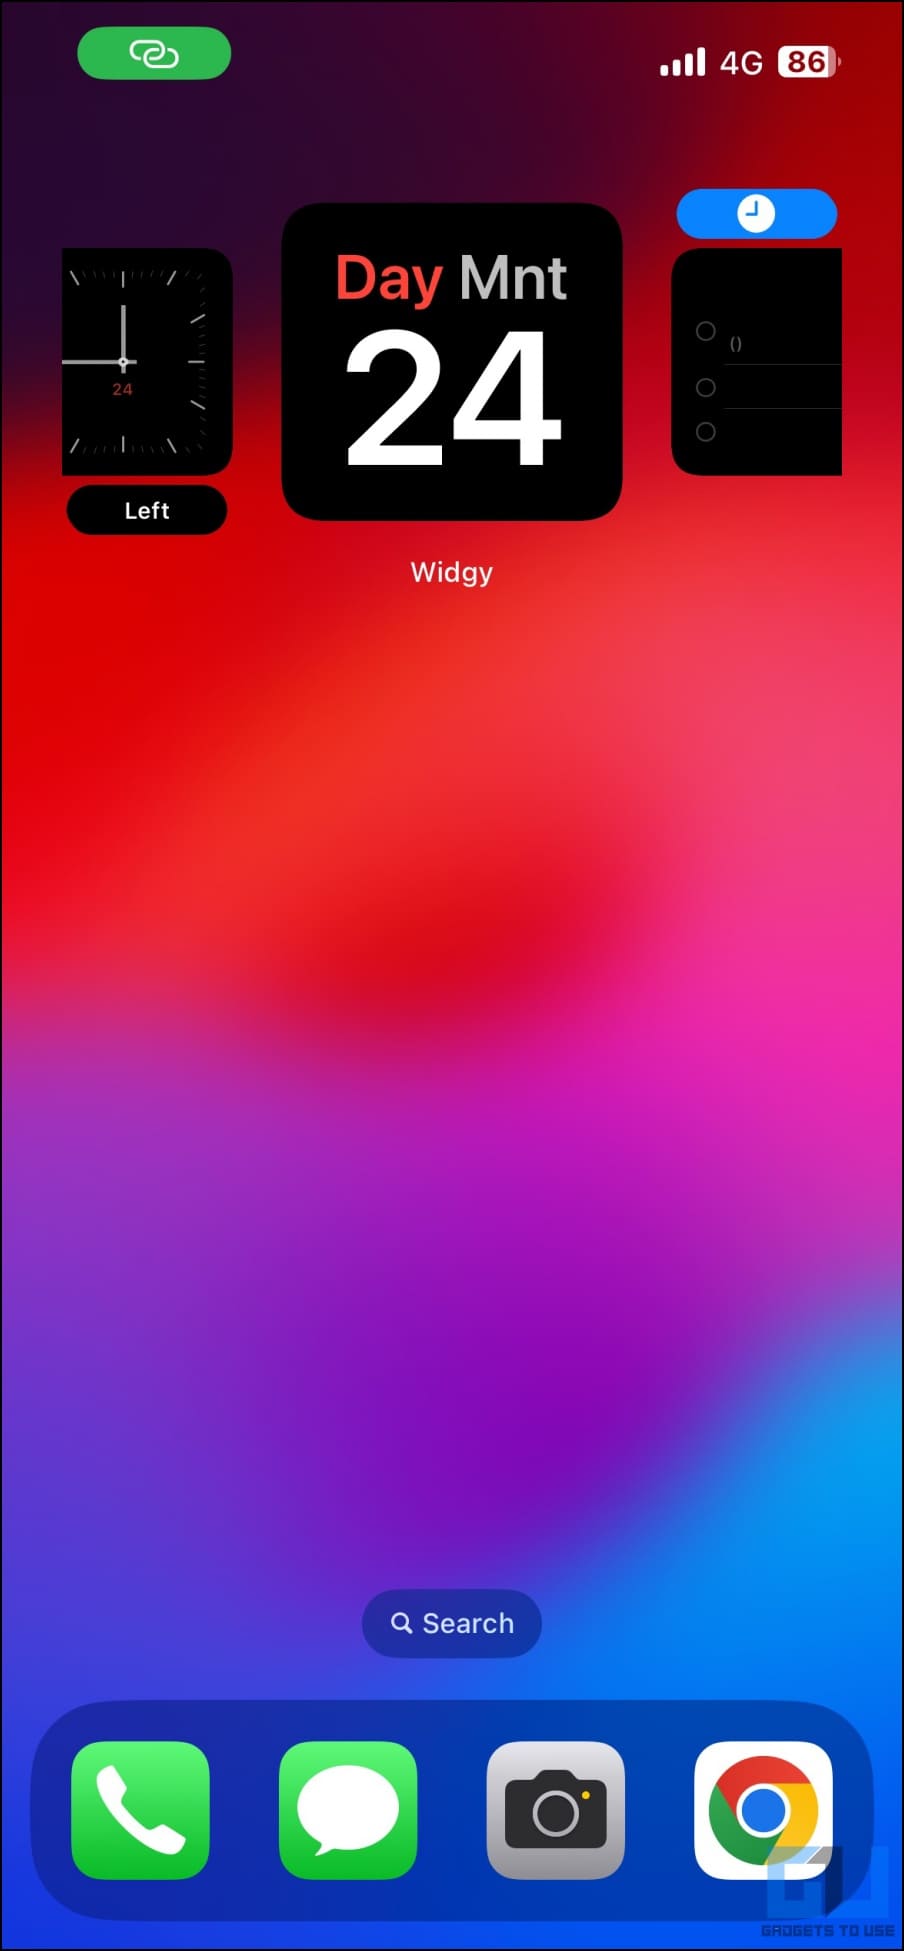 Standby Mode Widget on iOS 16 Home Screen